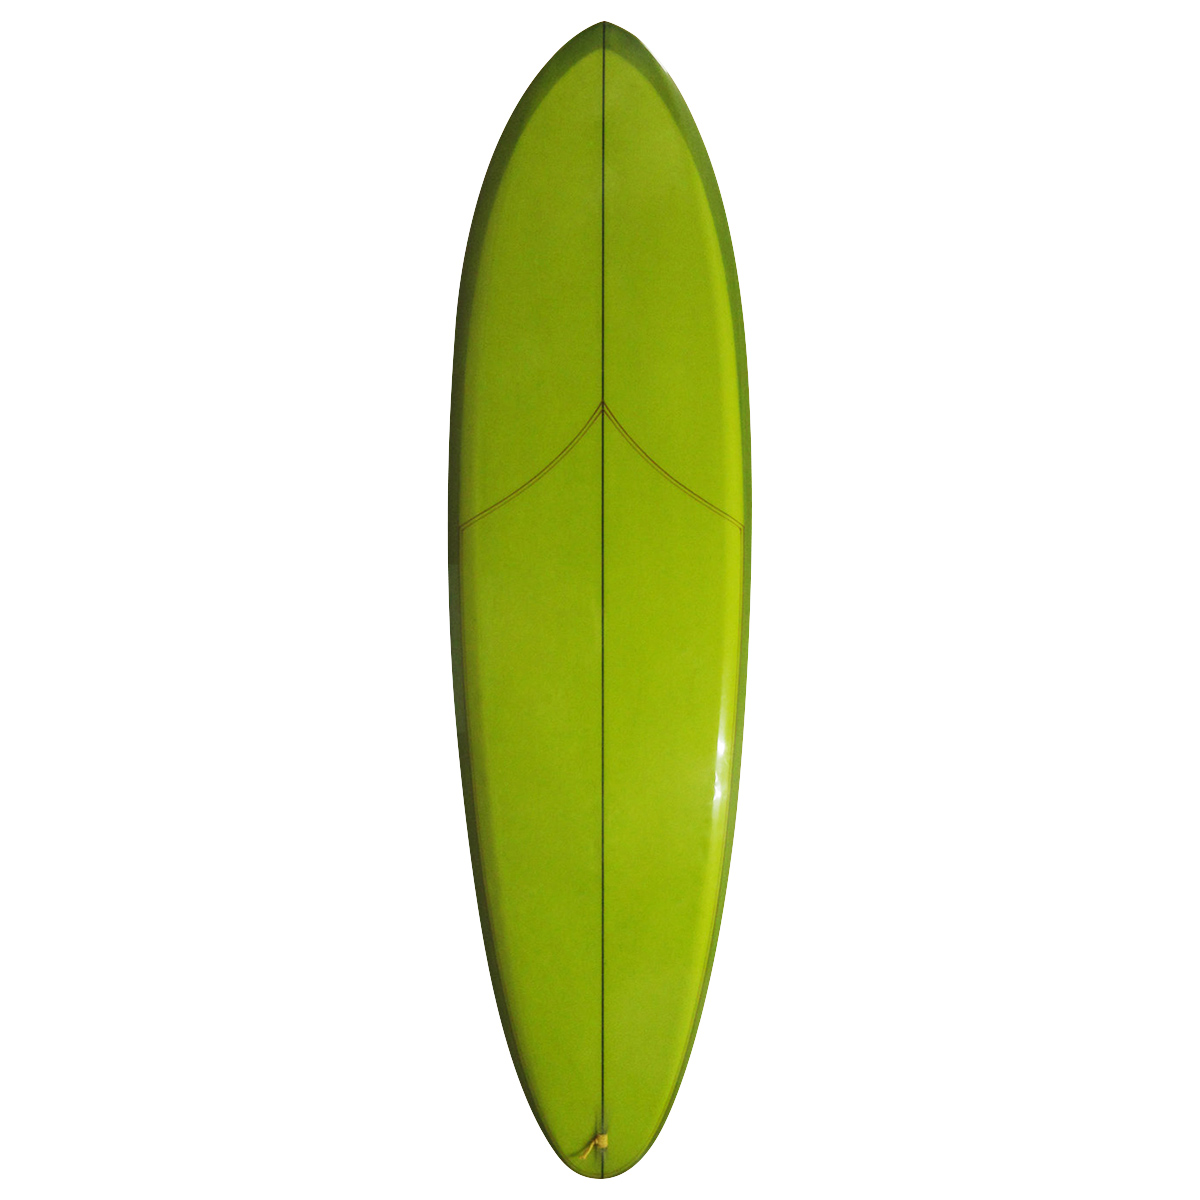 Mccallum Surfboards / Upside Down Egg 6'6 Shaped By Jeff Mccallum